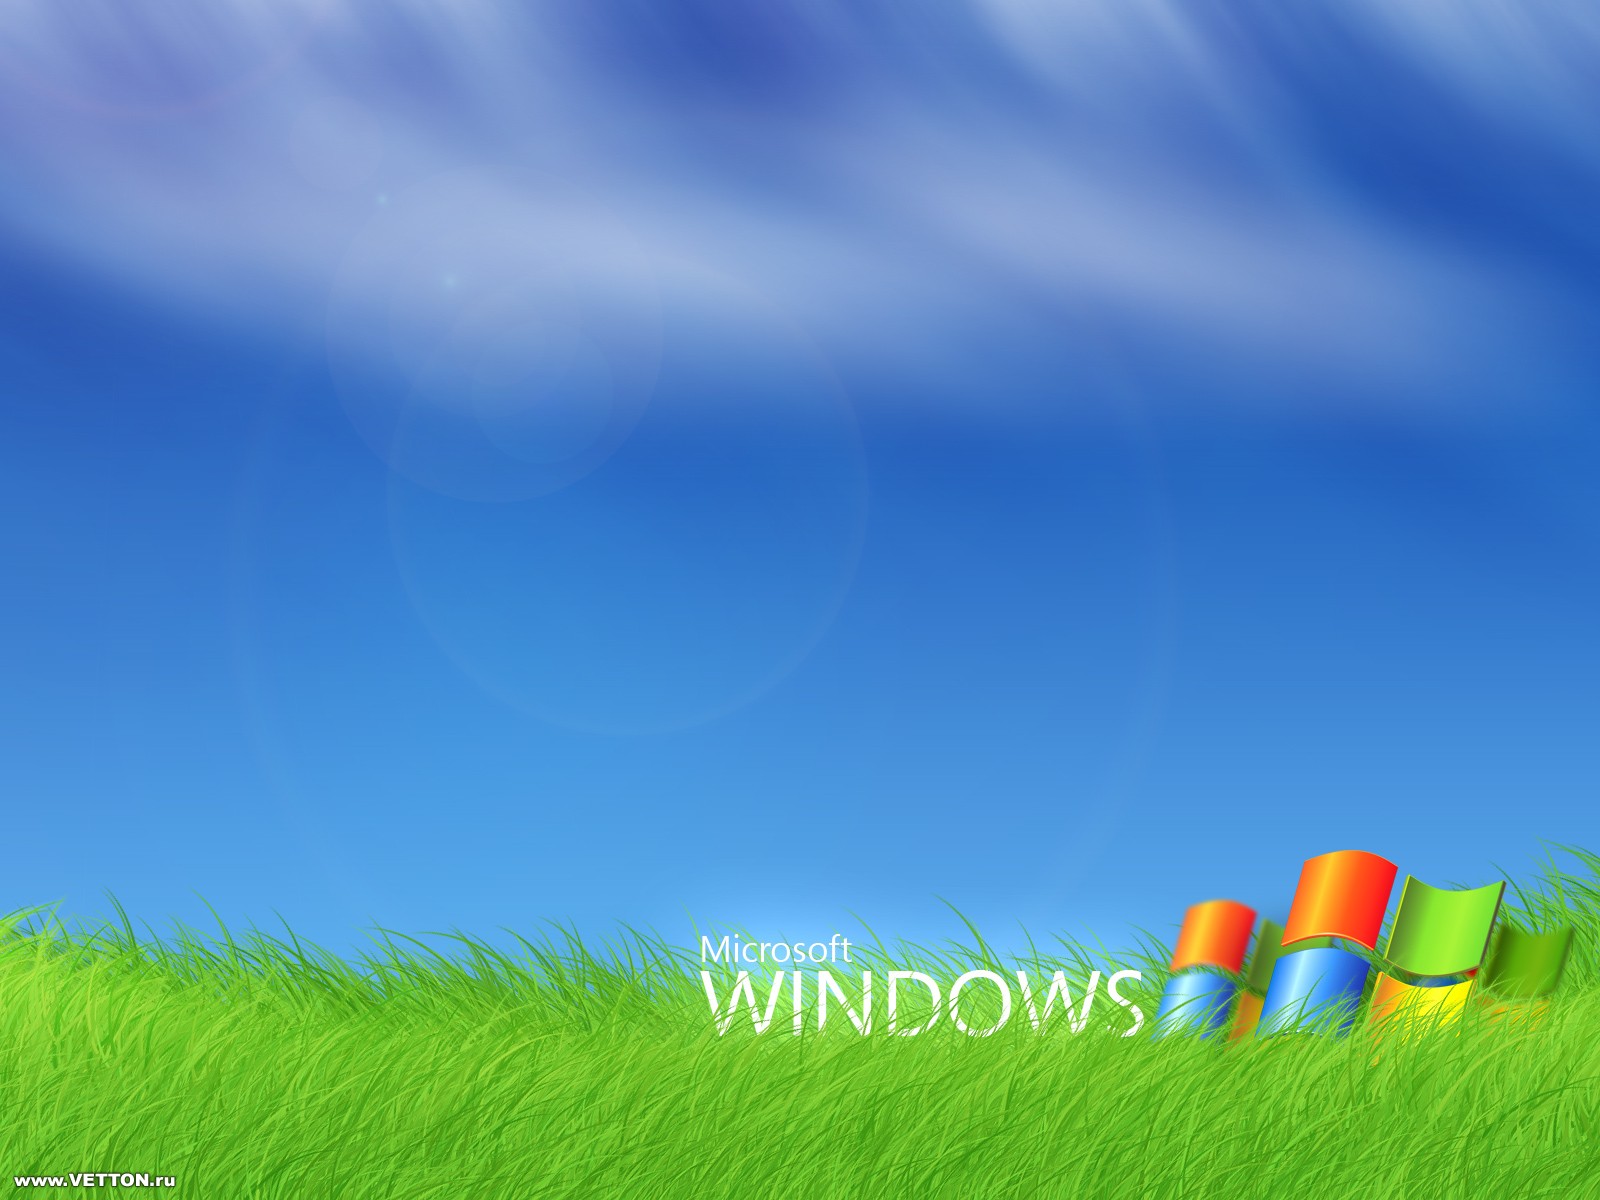 http://4.bp.blogspot.com/_RAlP3BmEW1Q/TQNp7yUAWHI/AAAAAAAABYA/g4f8Gpu3YSY/s1600/Windows-xp-achtergronden-windows-xp-wallpapers-7.jpg